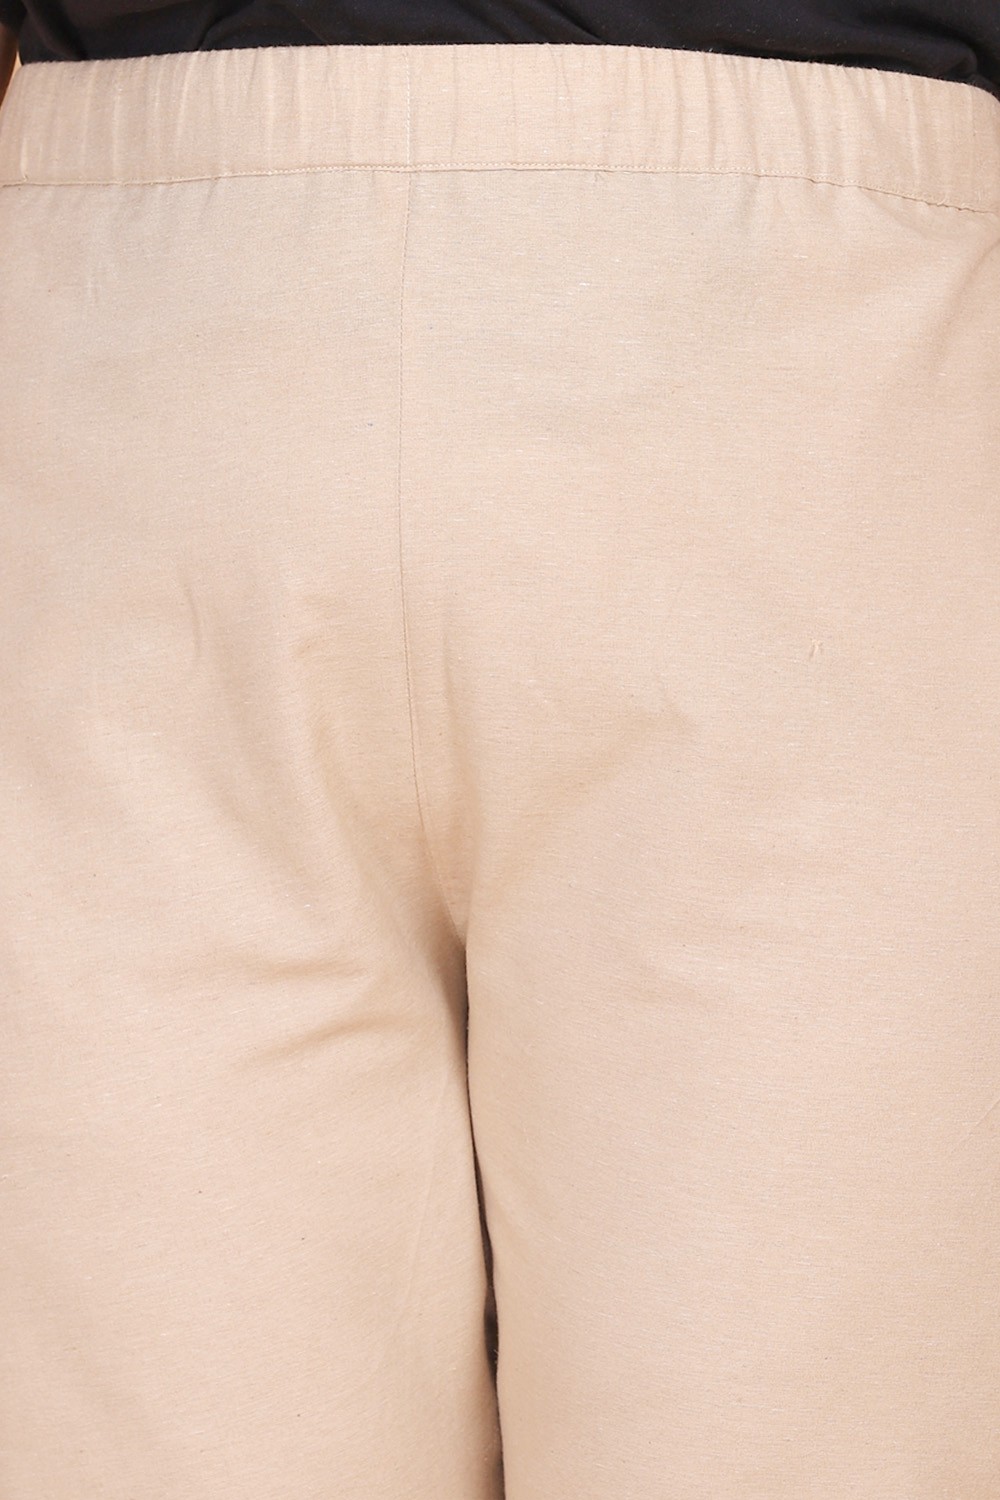 LASTINCH All Size's Cotton Beige Narrow Pant XXS-8XL